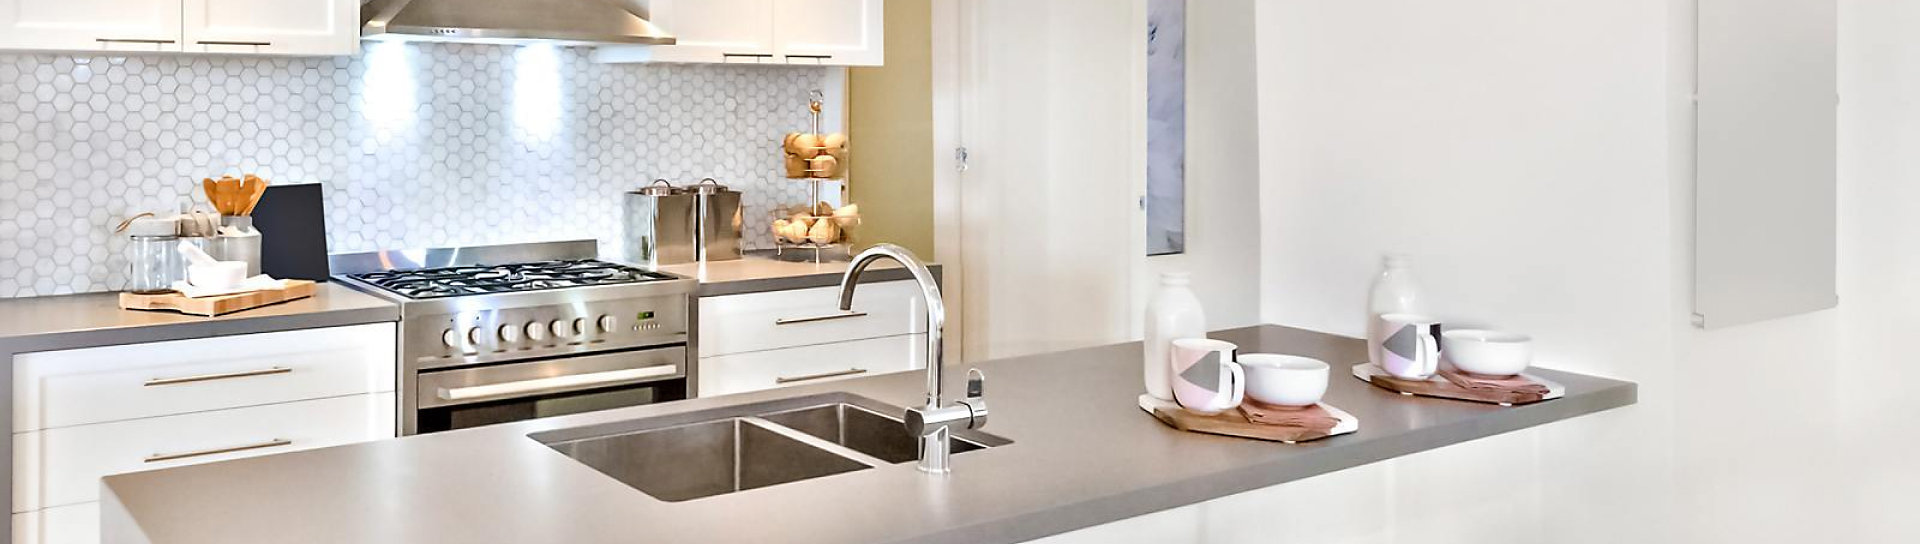 Modern white kitchen with island countertop